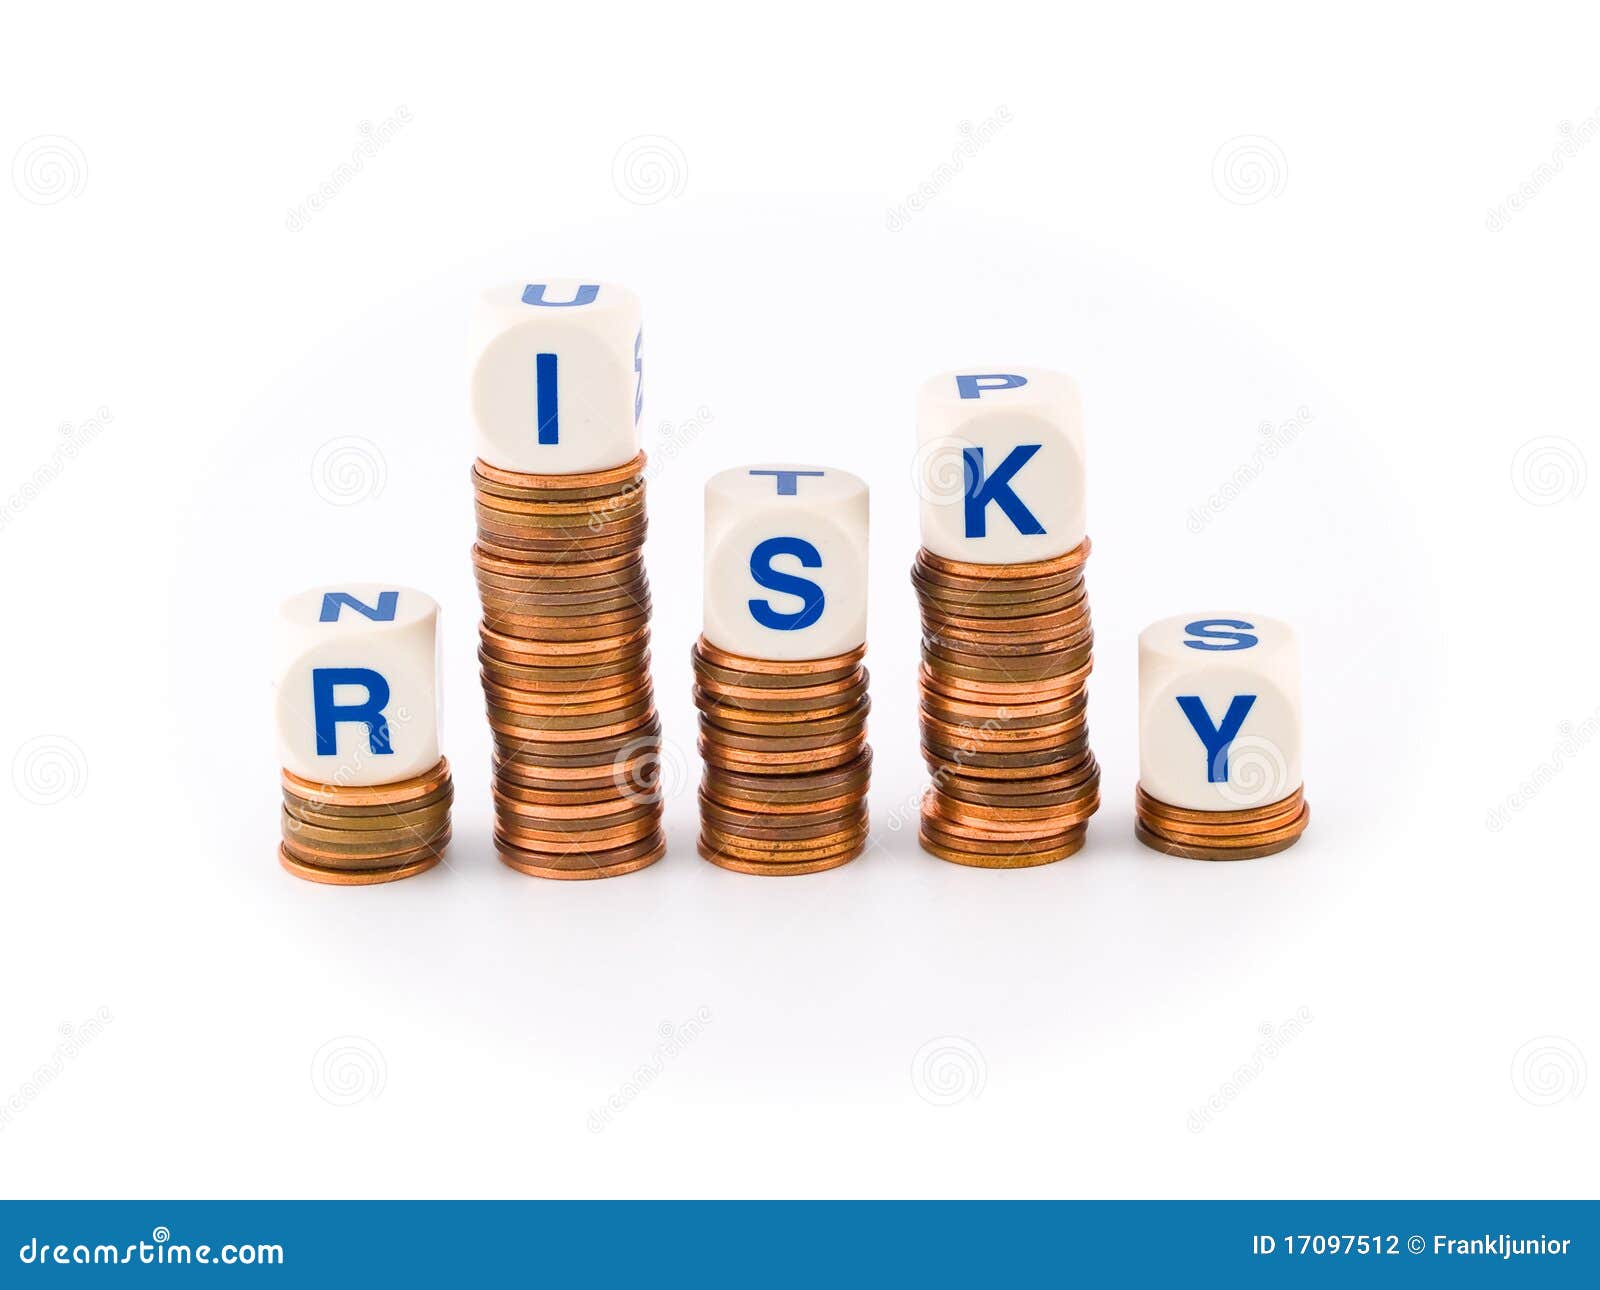 dice spelling risky on penny stacks